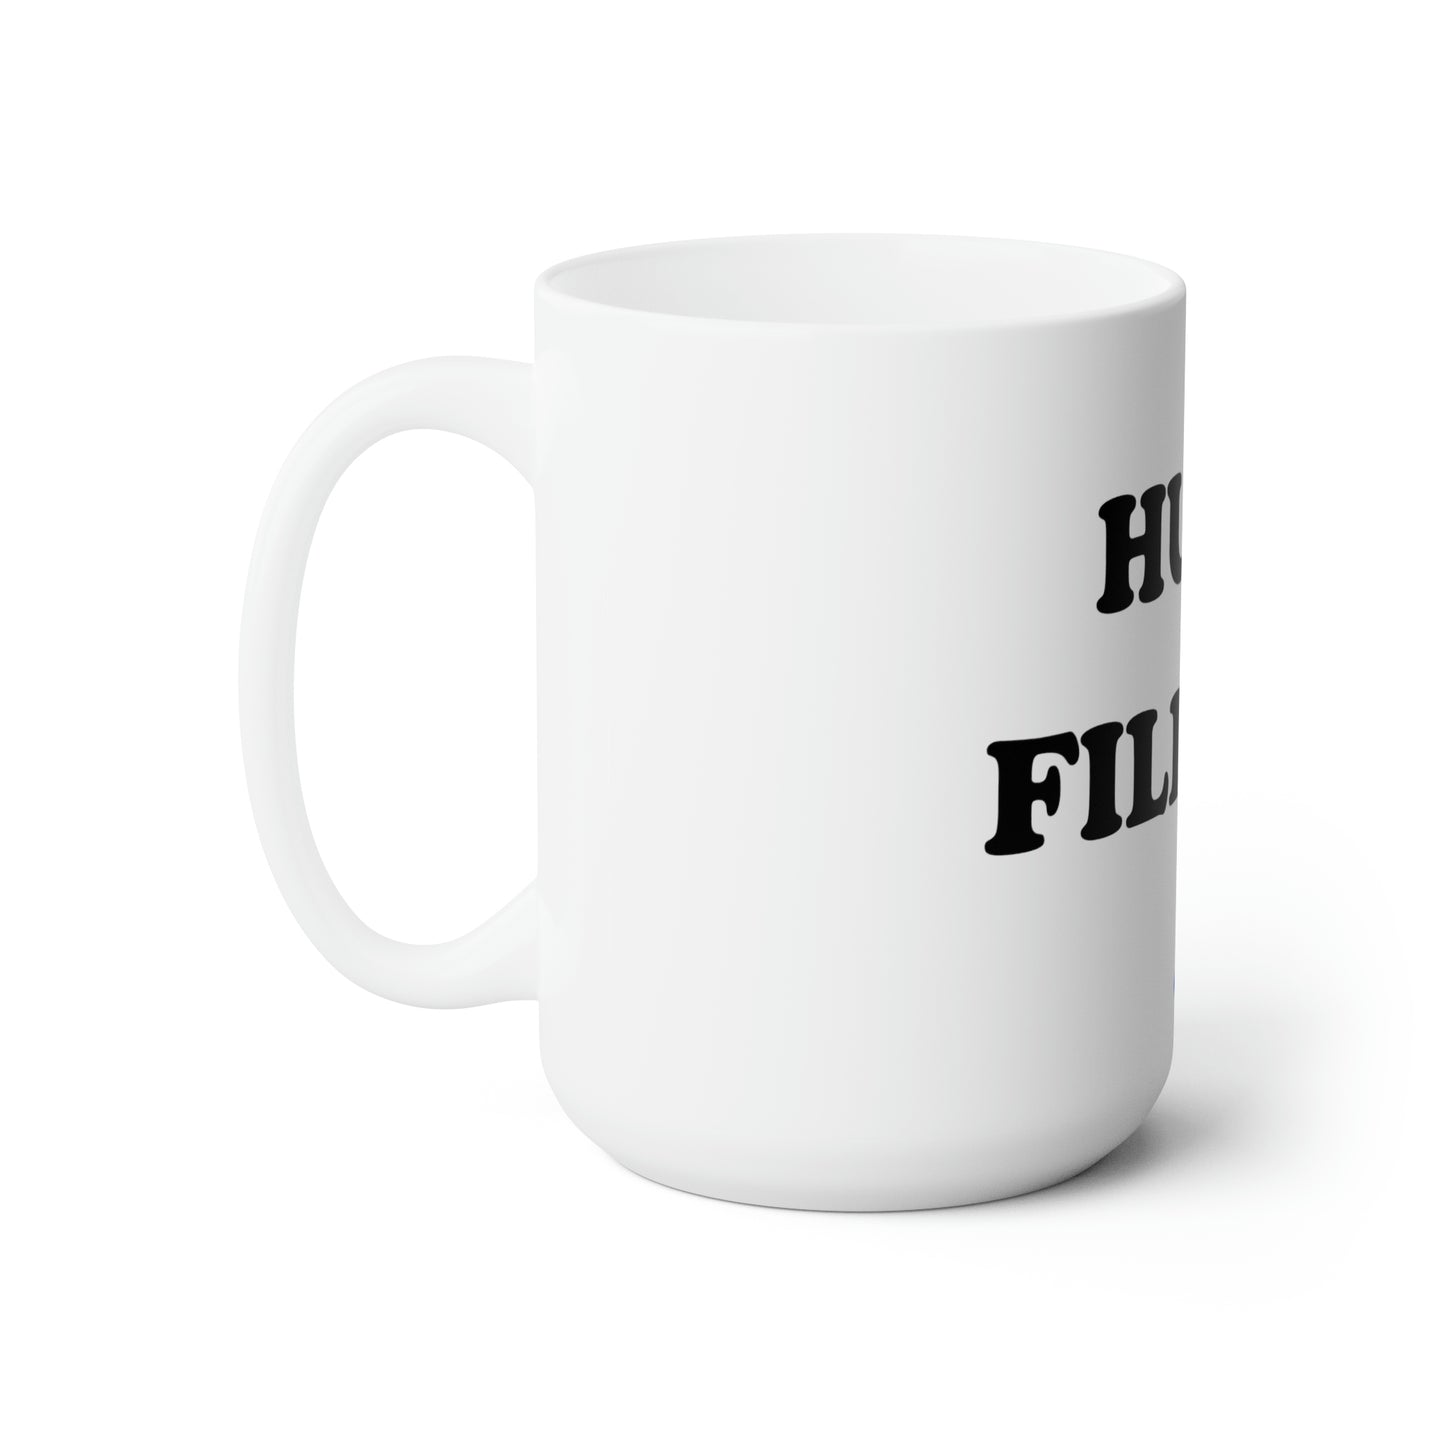 Huck Fillary Ceramic Mug 15oz